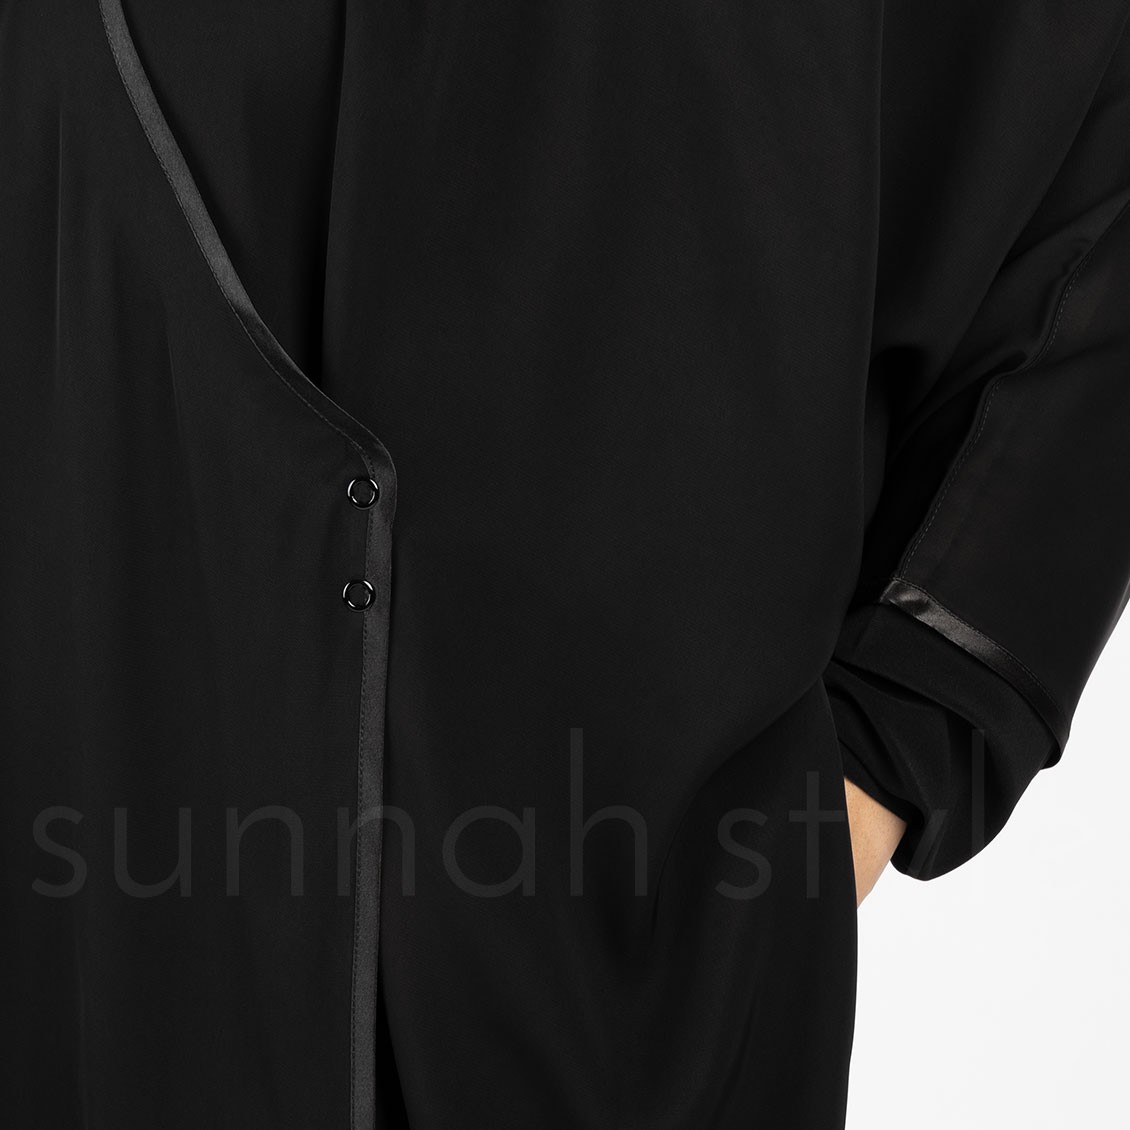 Sunnah Style Satin Trimmed Crossover Jilbab Black